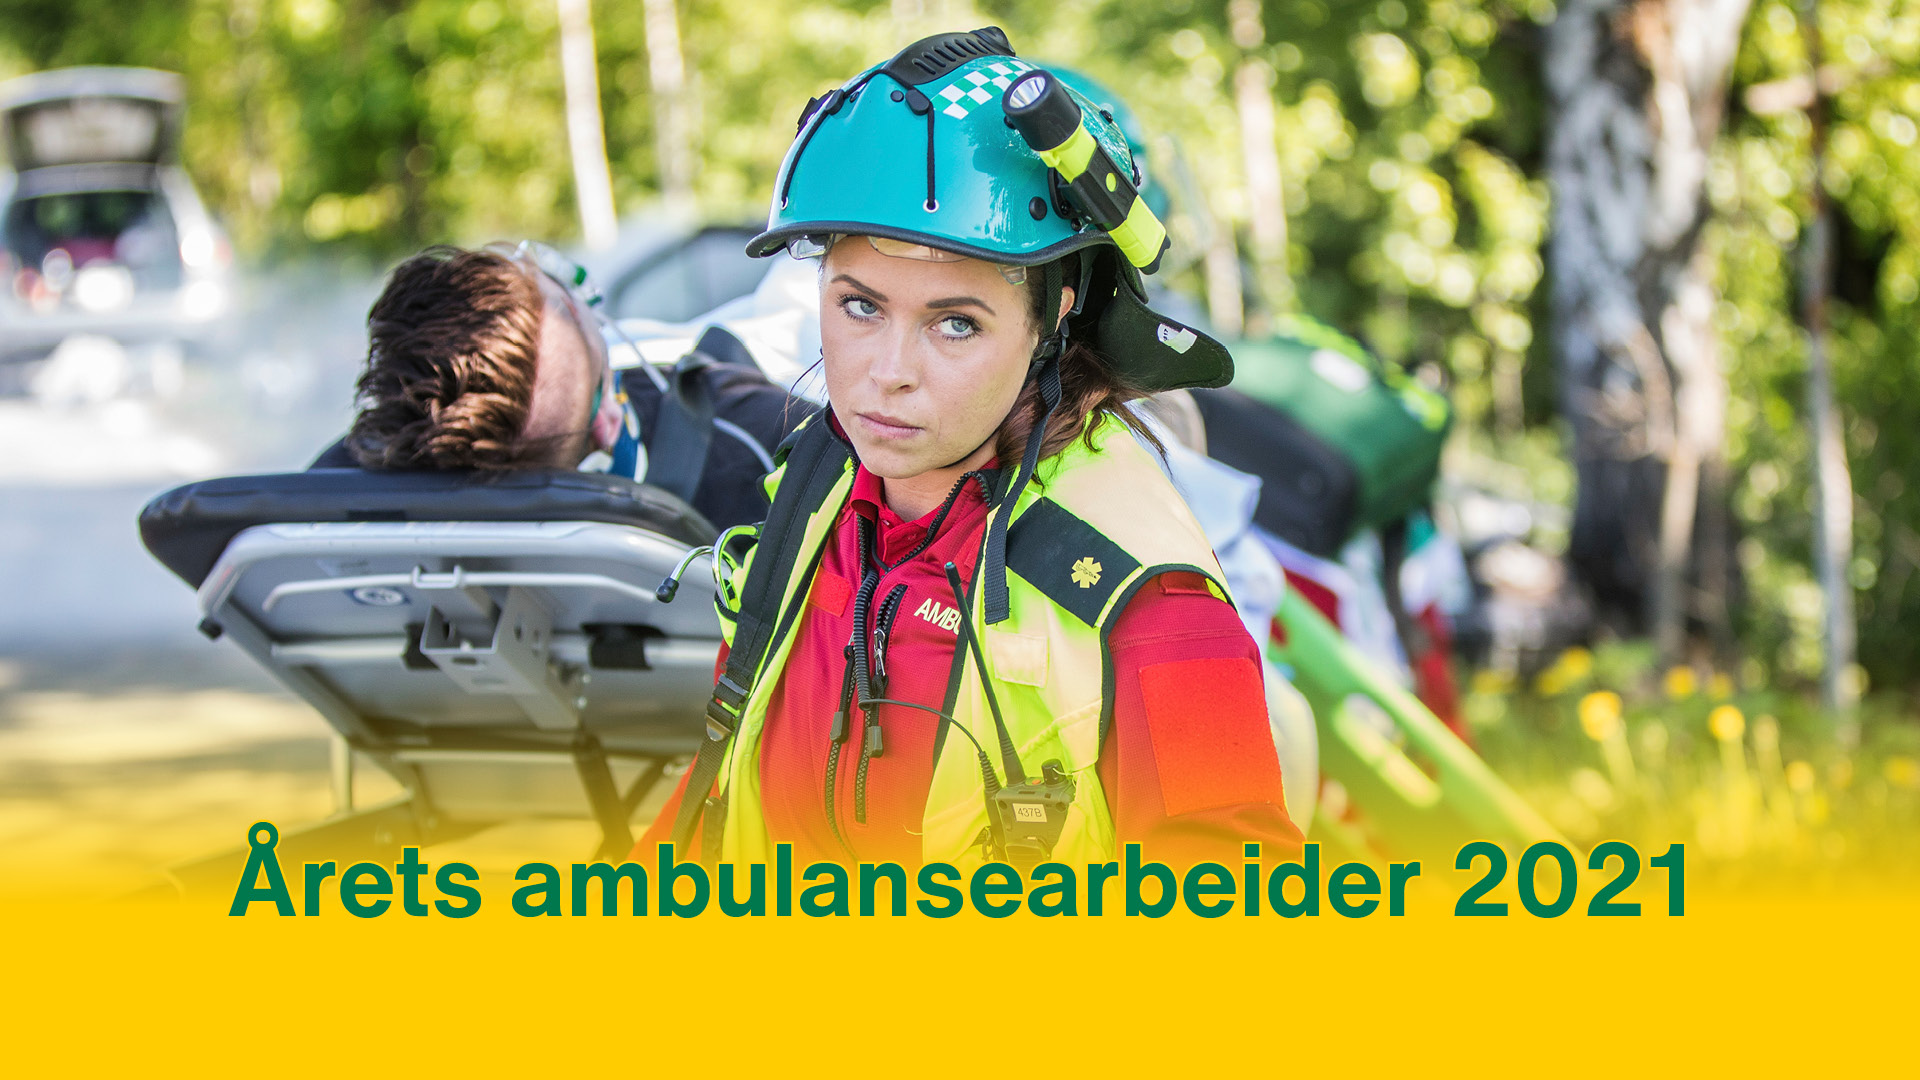 Årets ambulansearbeider. Foto: Fredrik Naumann/Felixfeatures.com.